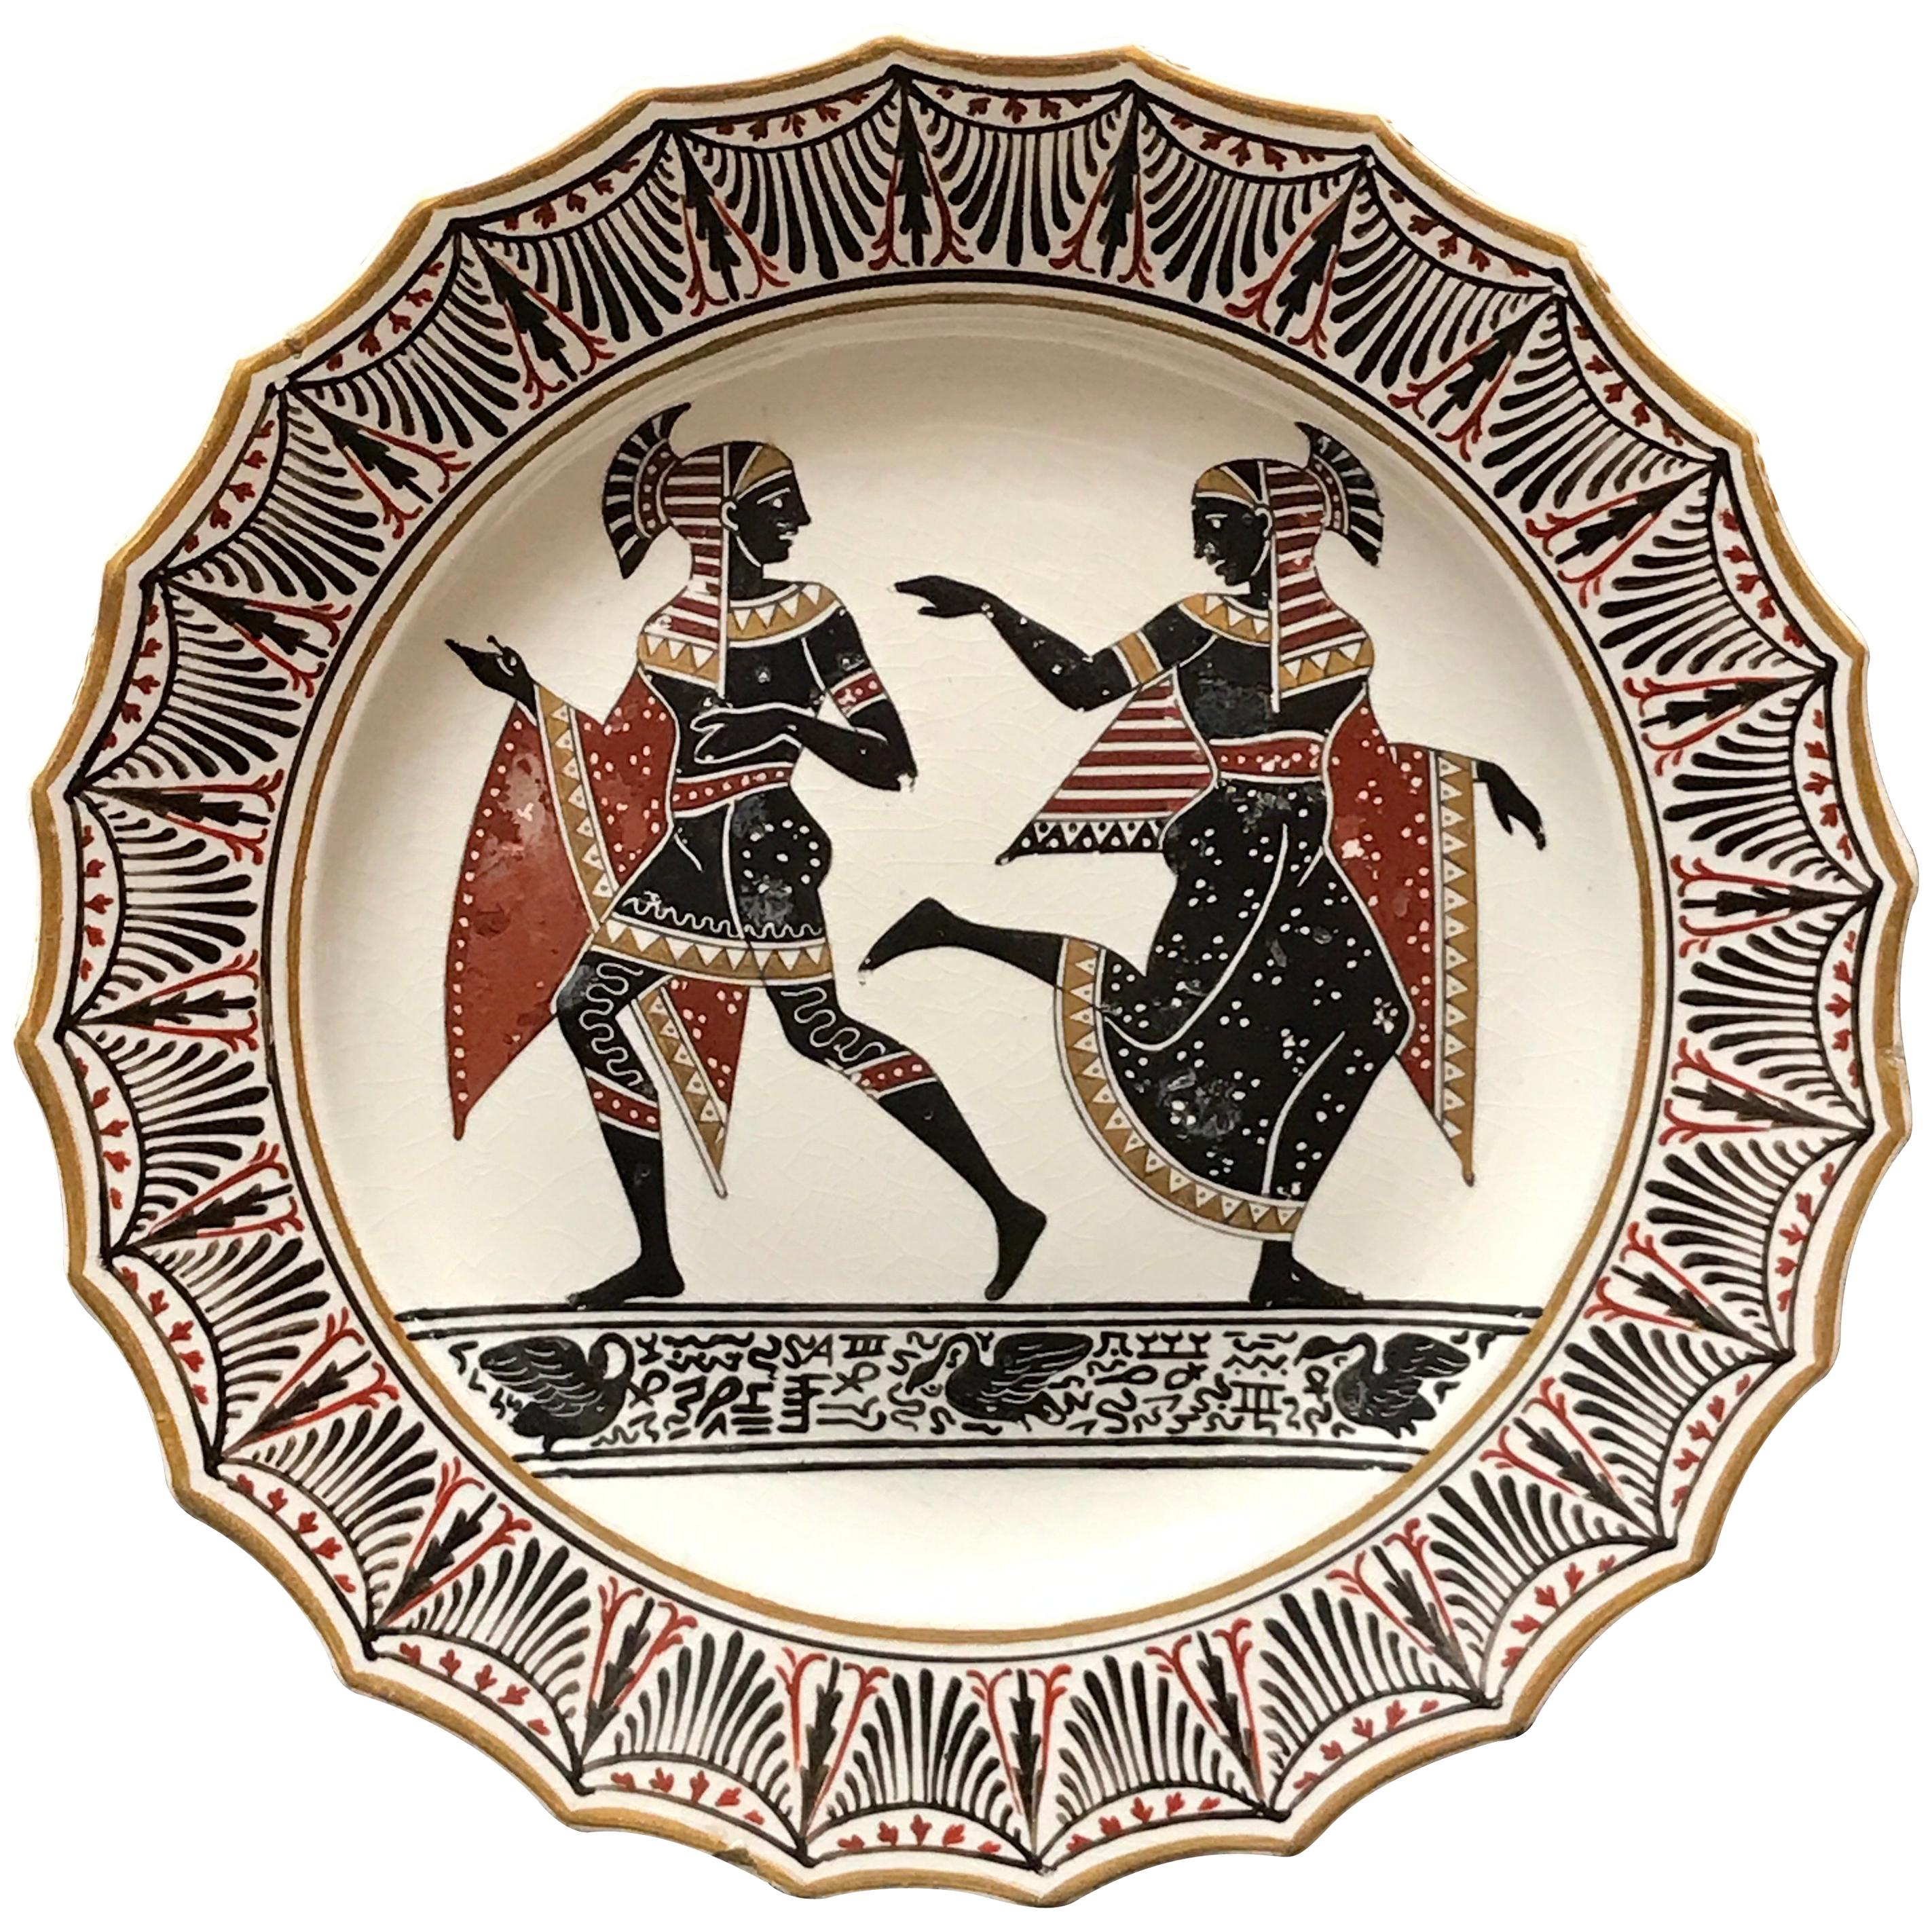 Giustiniani Egyptomania-Keramikteller mit vergoldeten Akzenten, Schwan links